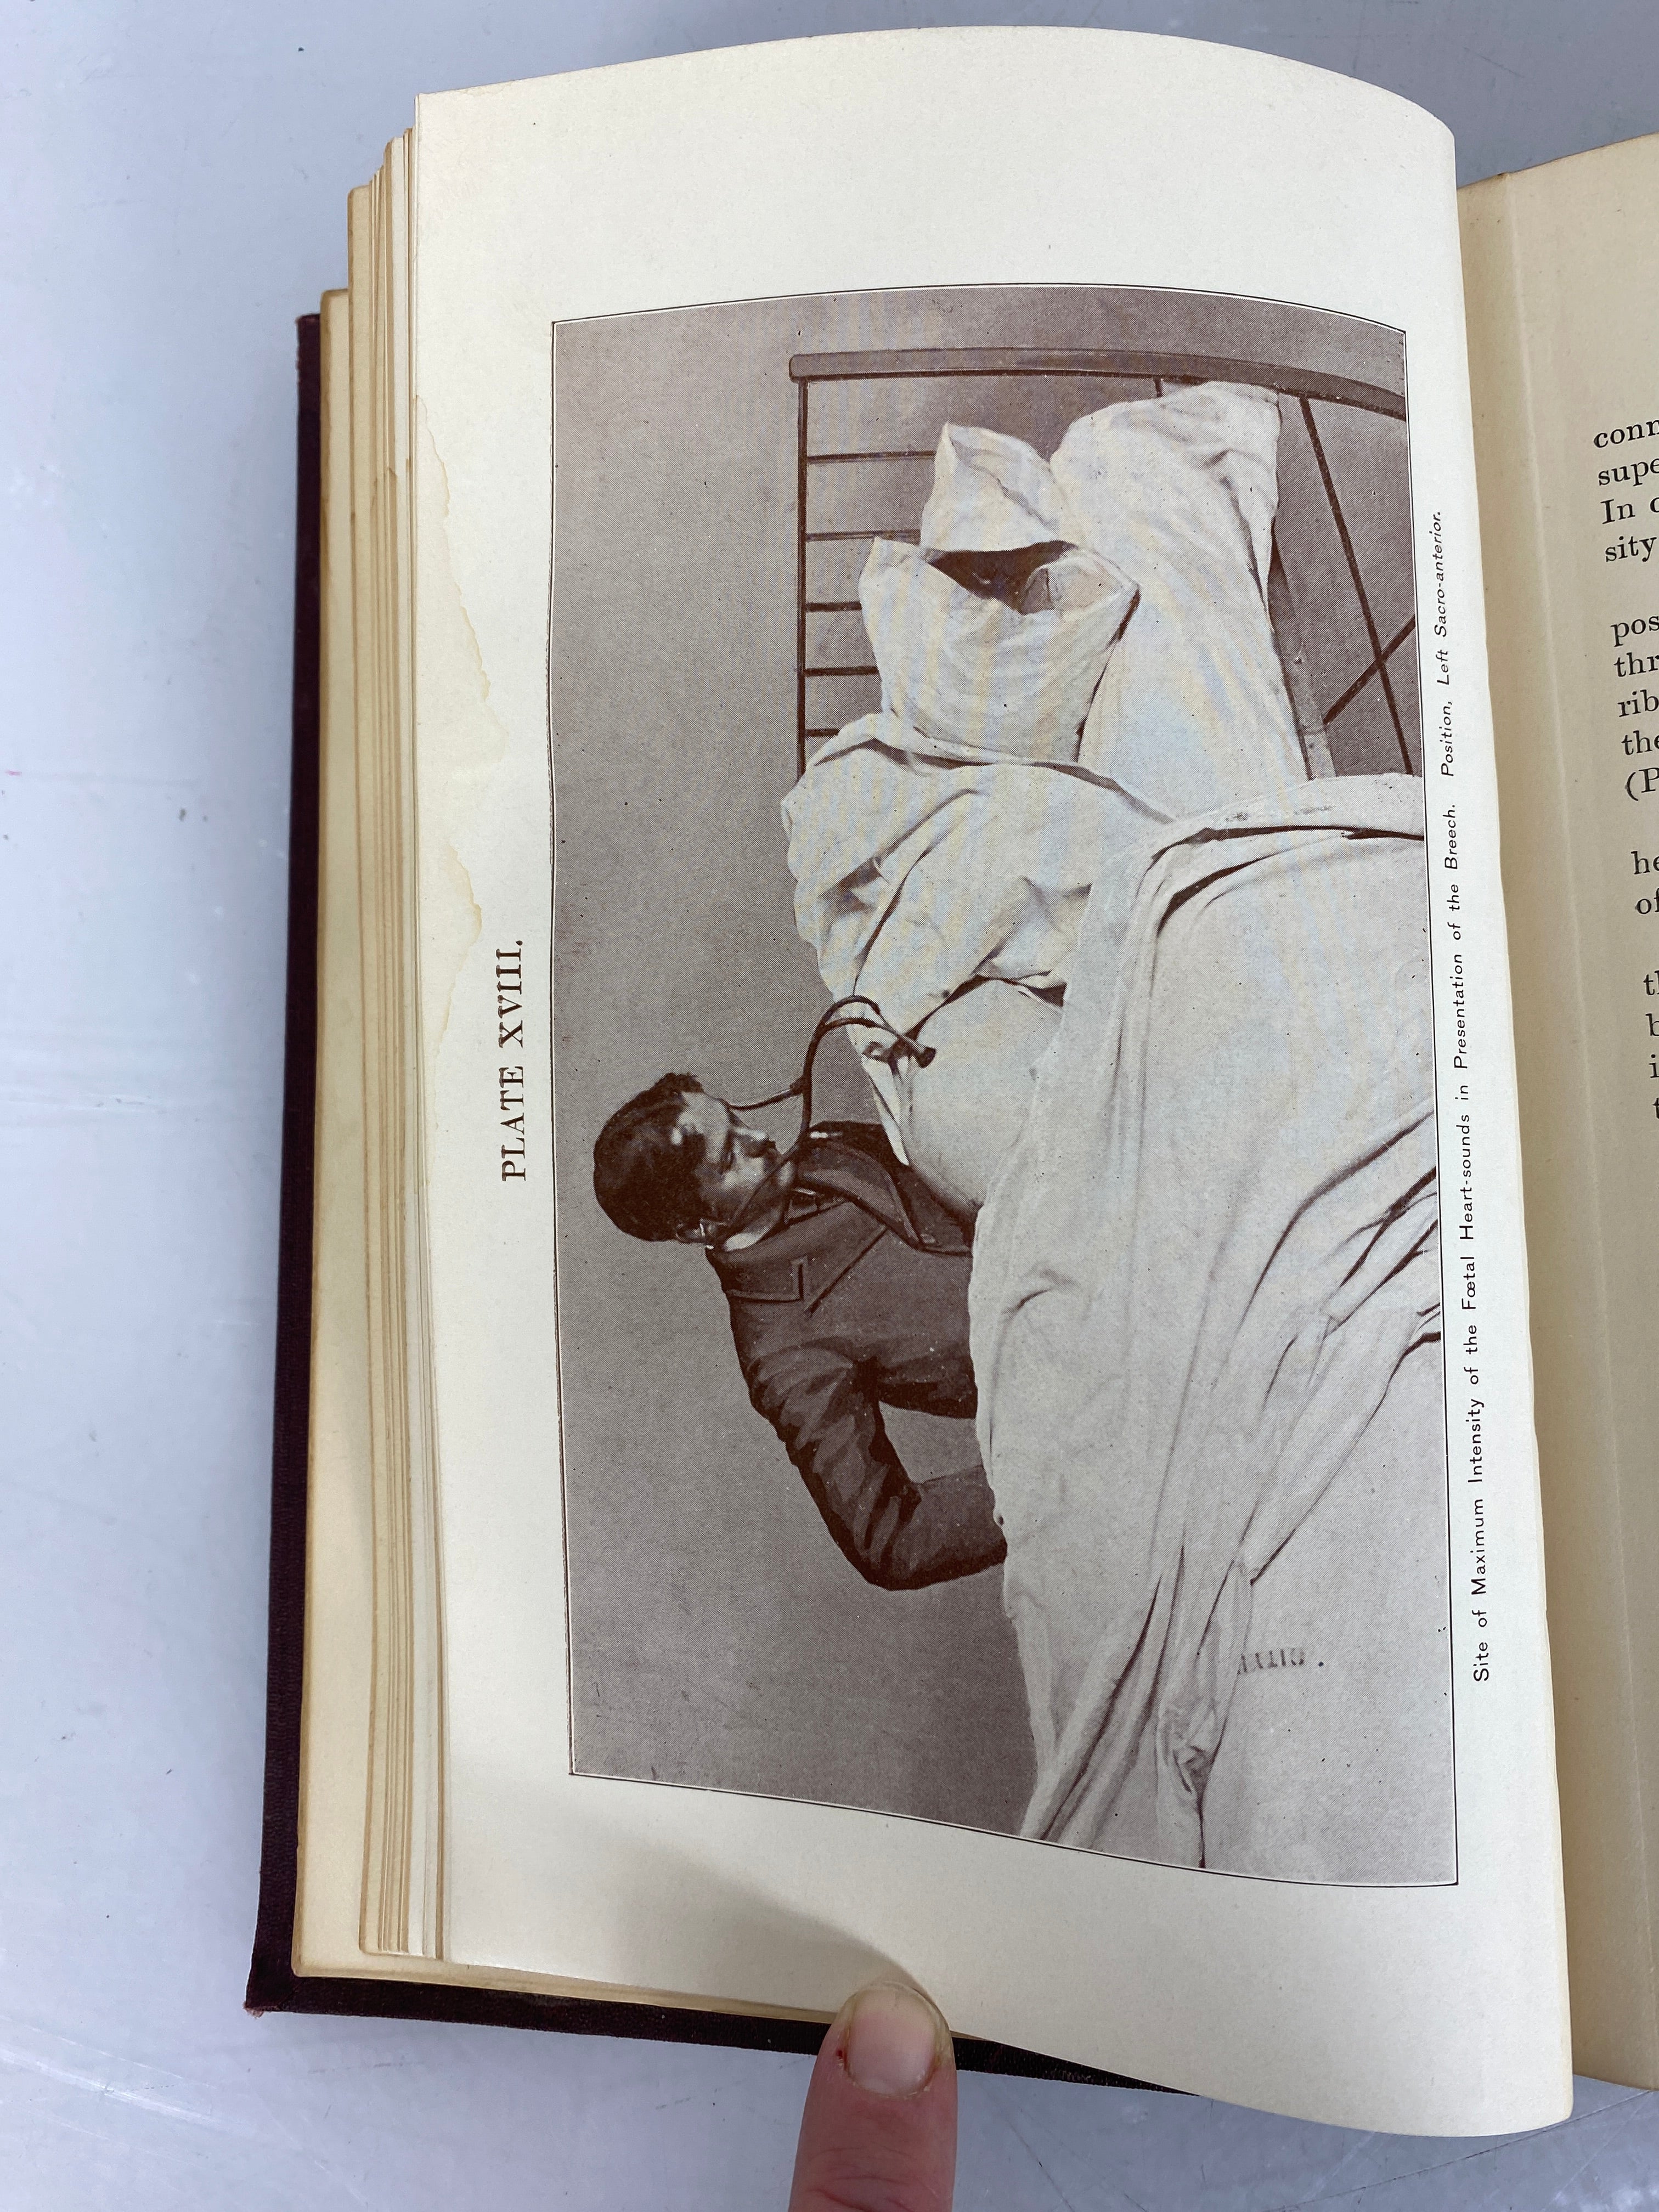 Practical Obstetrics by Egbert H. Grandin and George W. Jarman 1896 HC